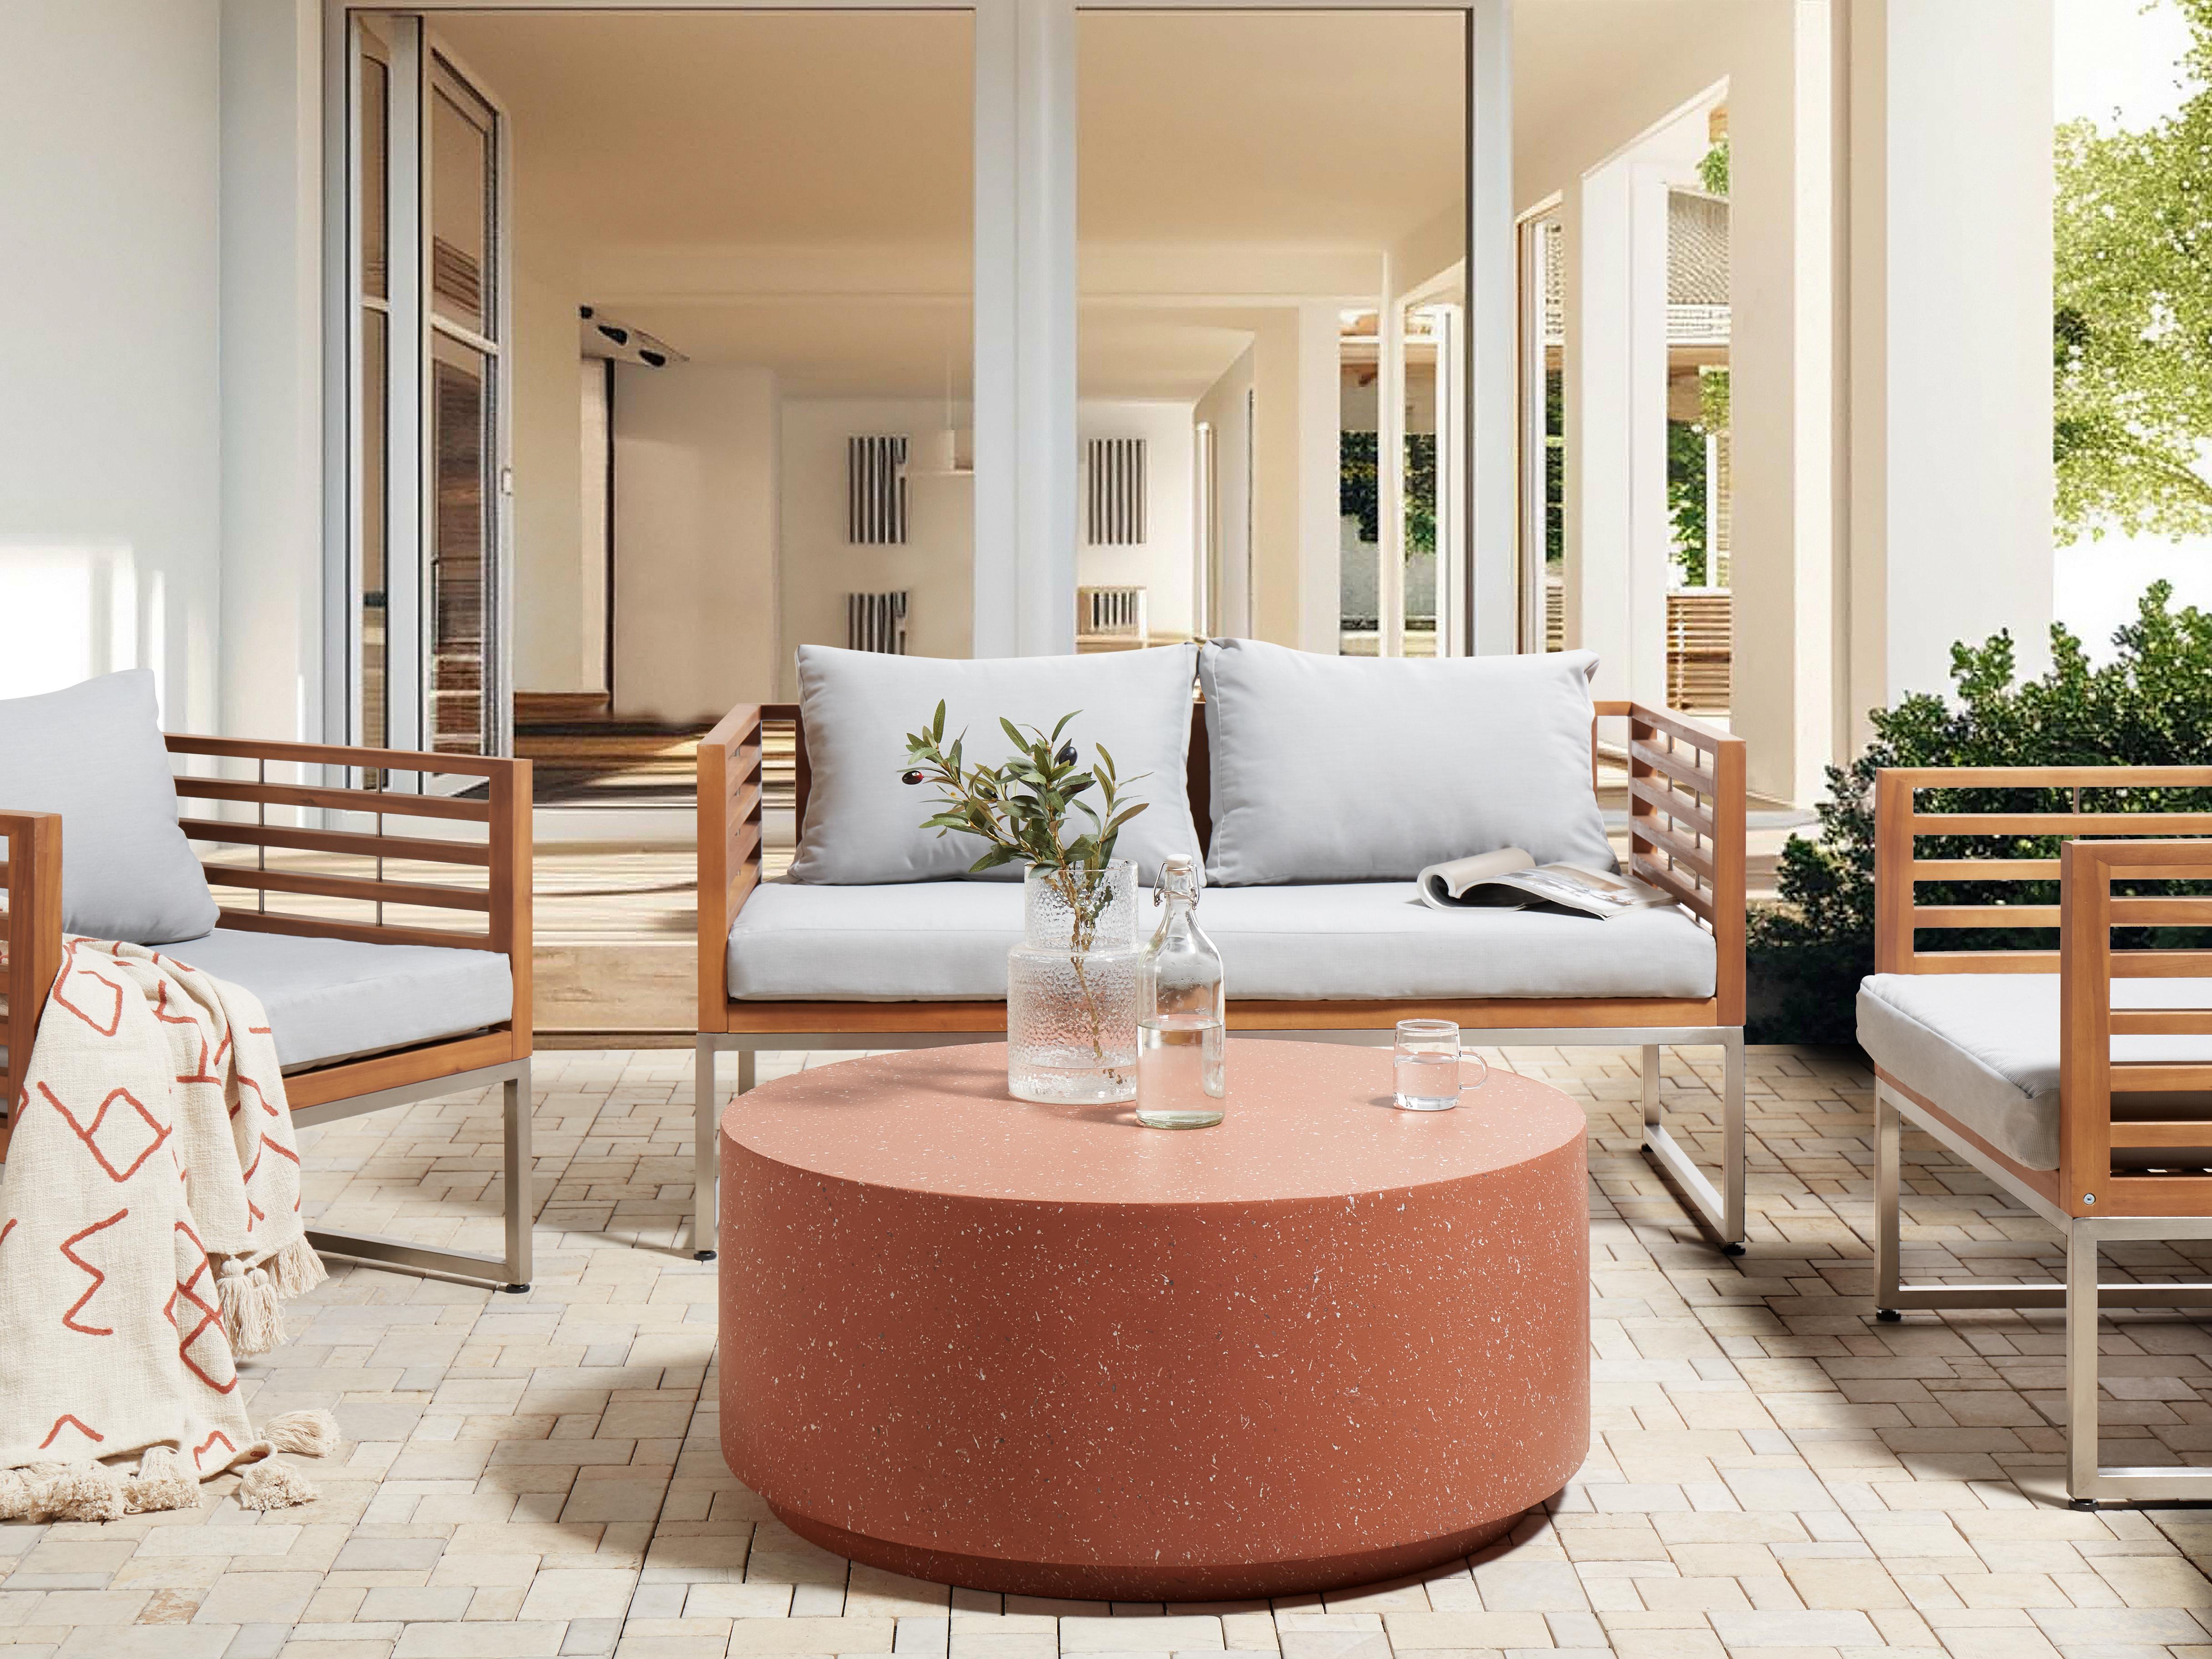 Sleek Terrace with Terrazzo Table